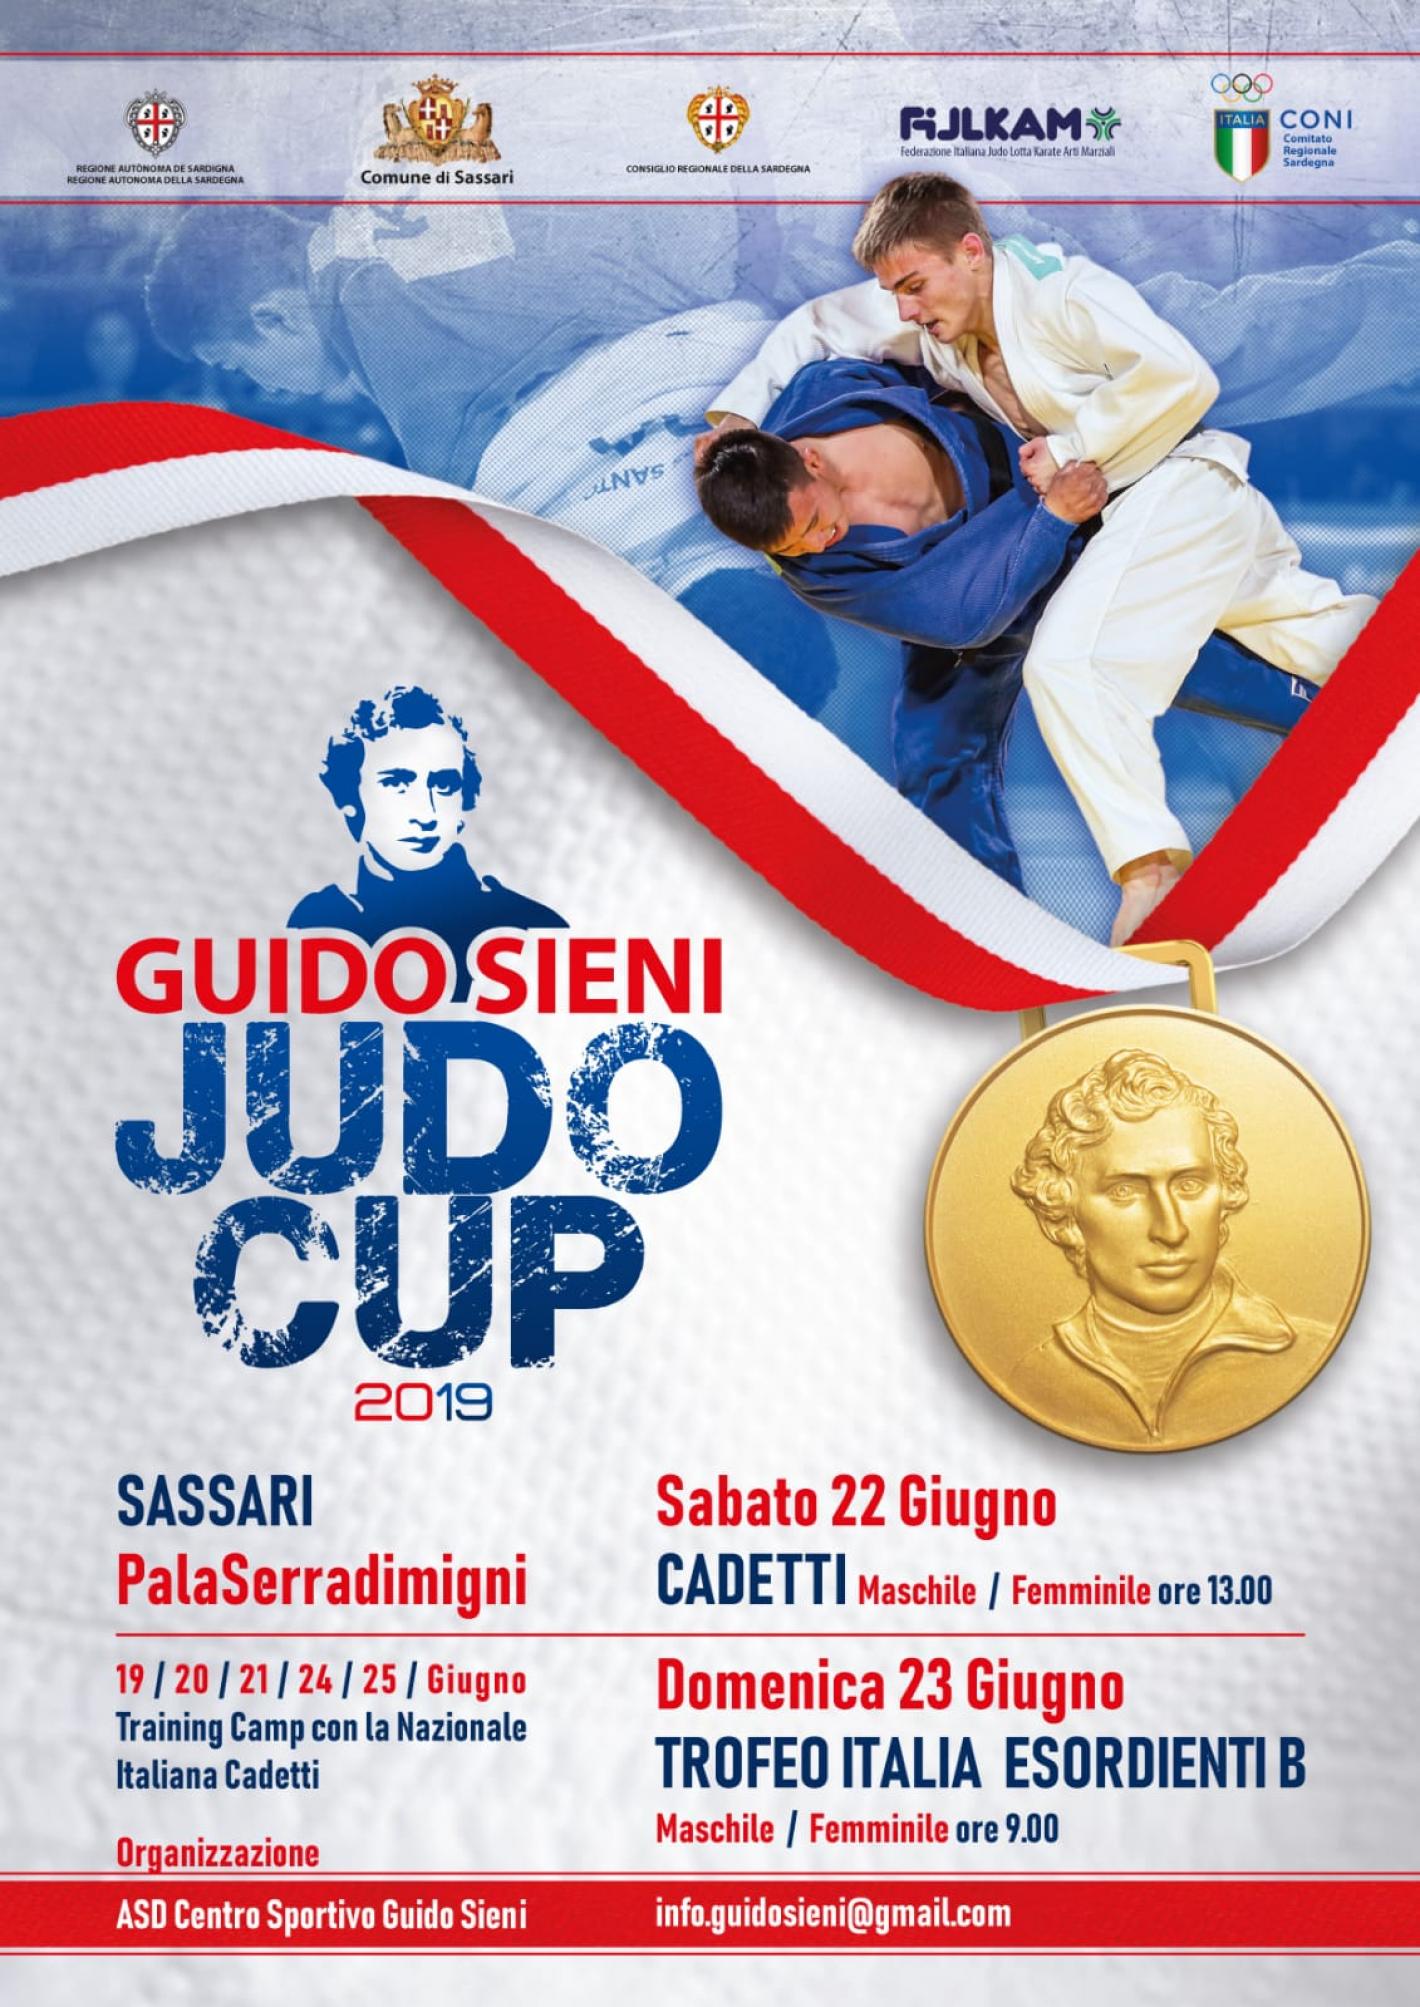 images/sardegna/Settore_Judo/2019/GUIDO_SIENI_JUDO_CUP_2019/medium/Guido_Sieni_CUP_2019.JPG